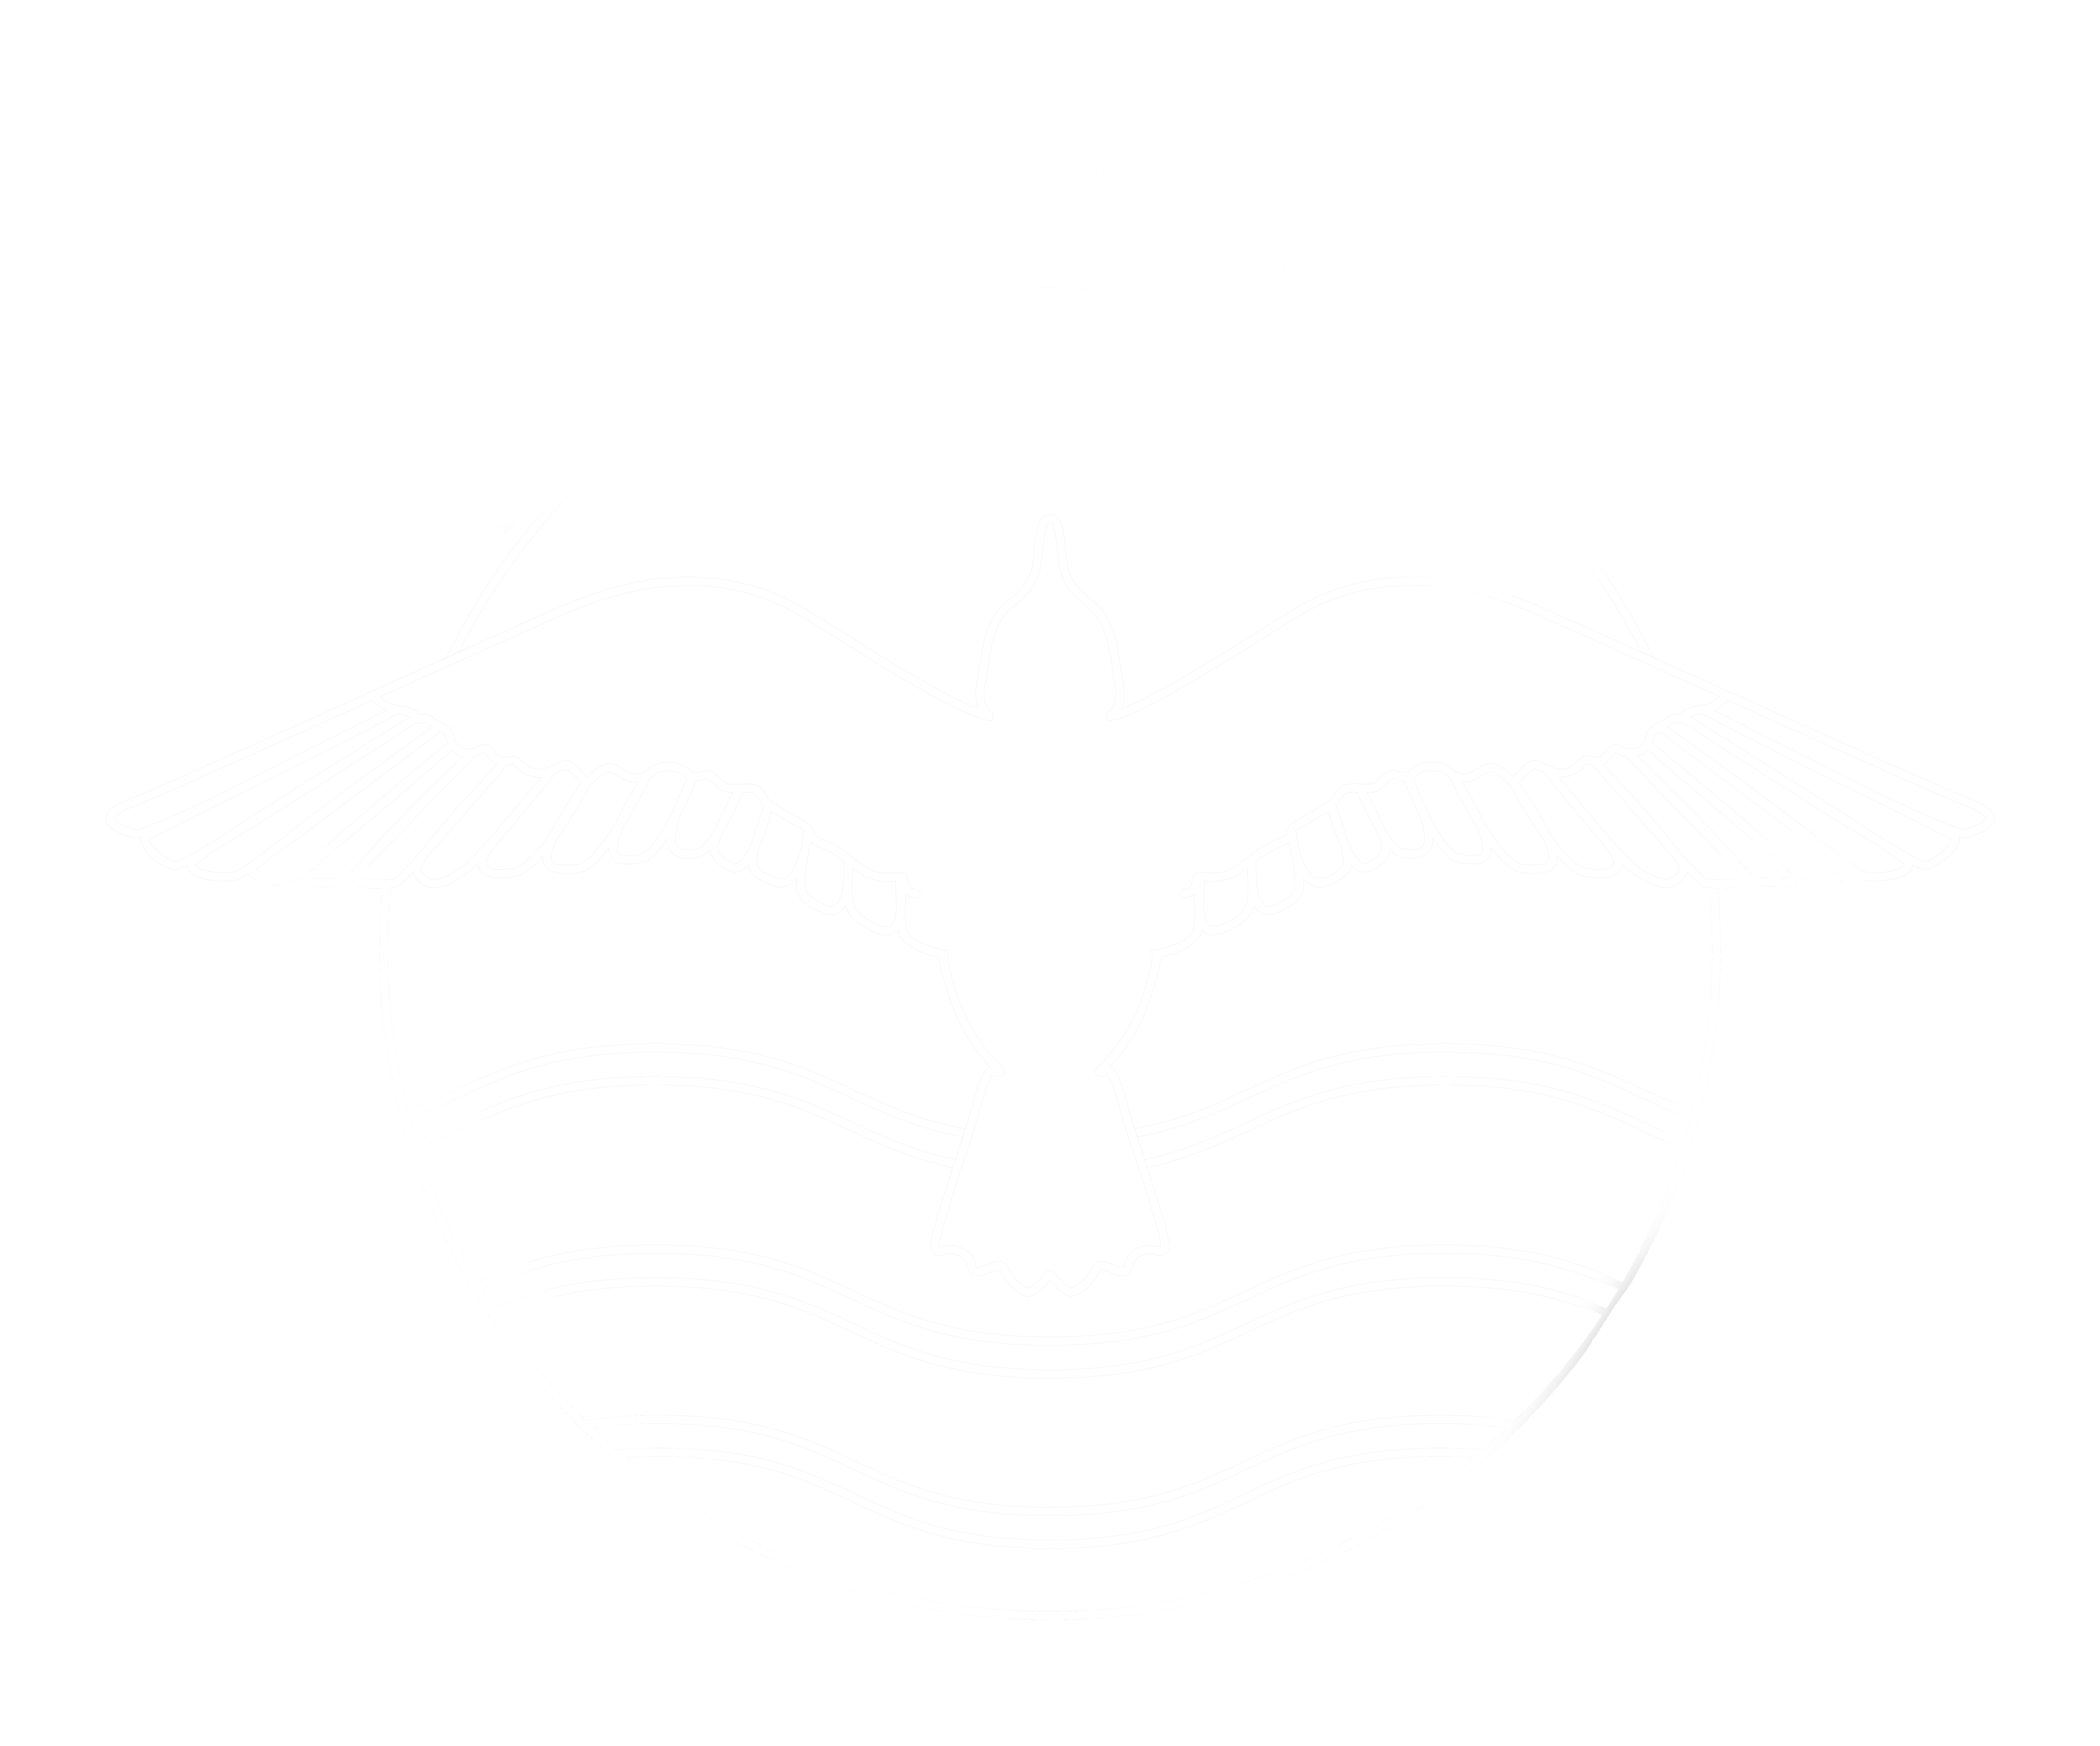 Hilbre High School